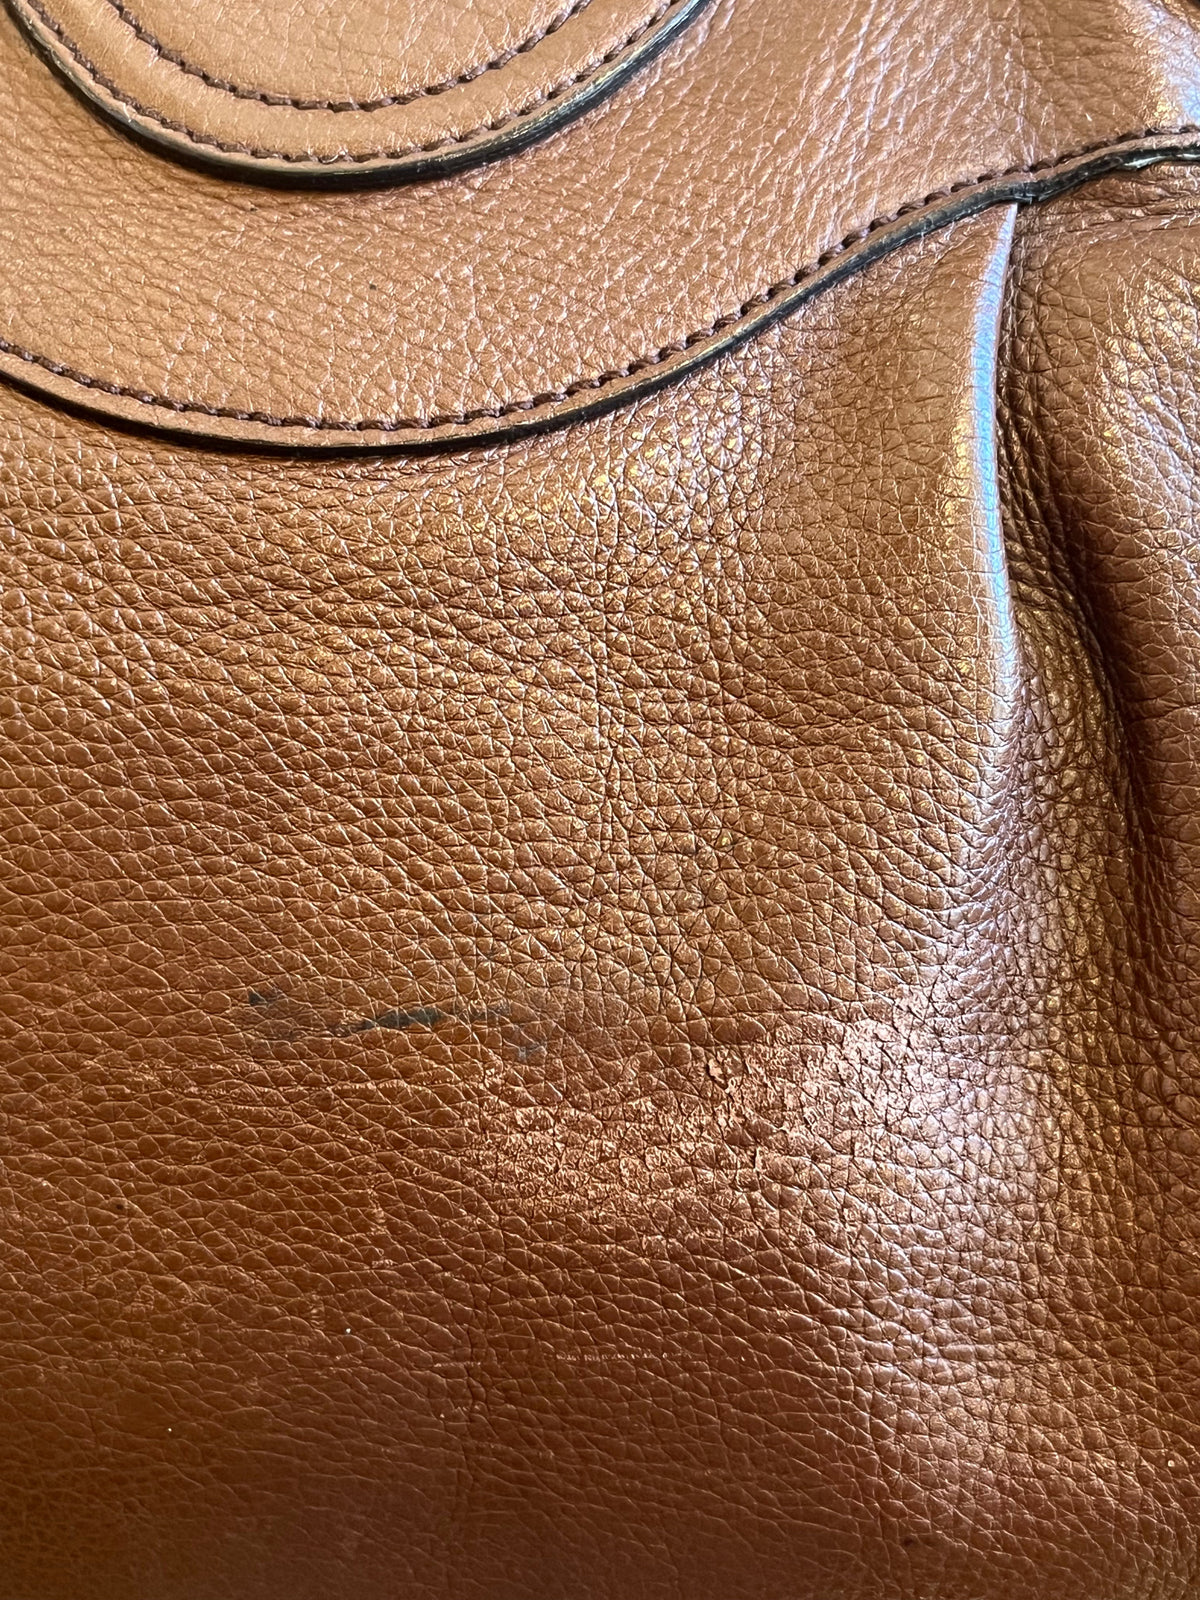 Salvatore Ferragamo Brown Leather Shoulder Bag